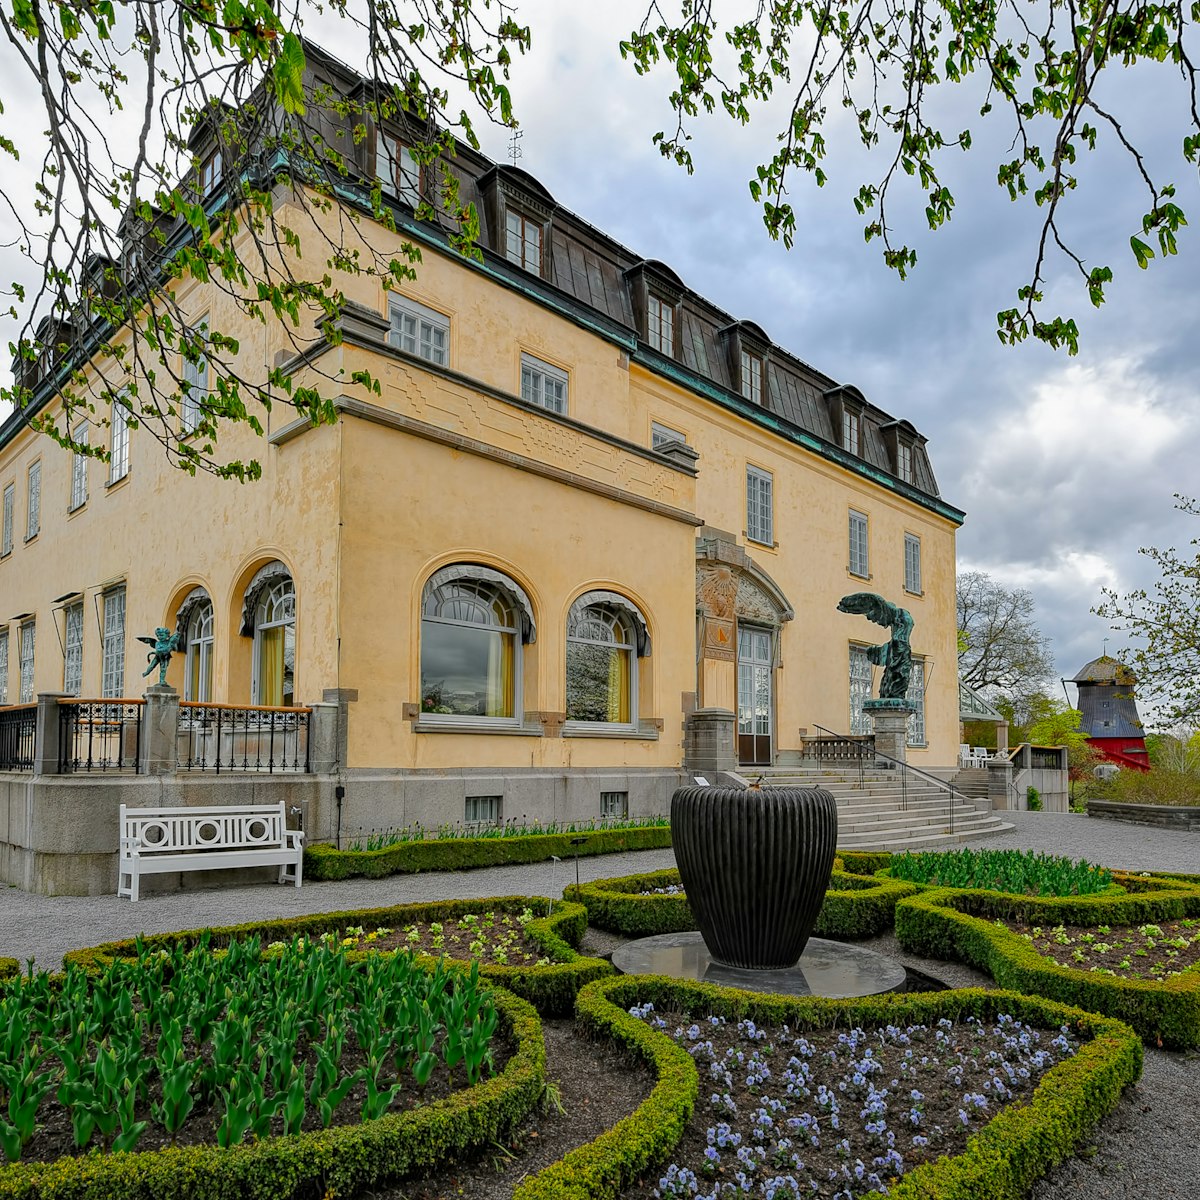 Waldemarsudde museum, scenic former residence of Prince Eugen, on Jurgarden island.